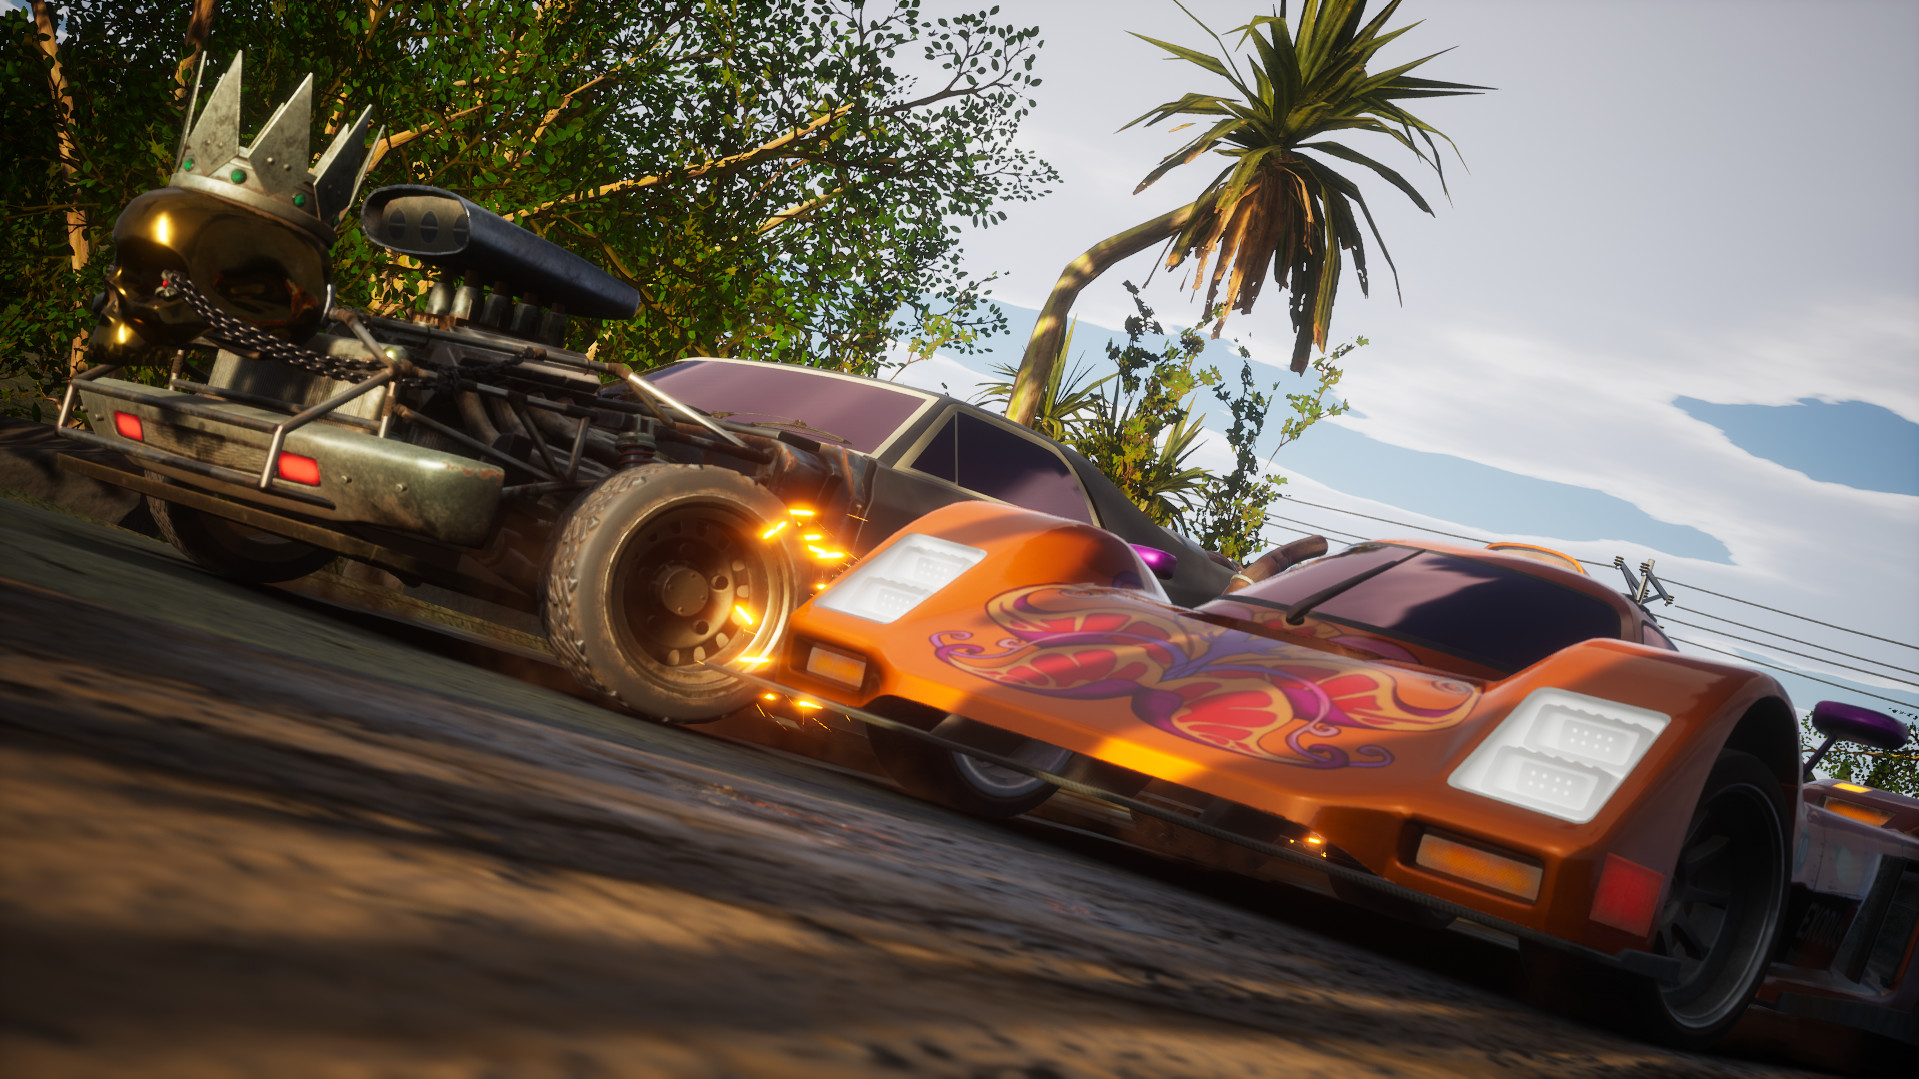 Fast & Furious: Spy Racers Rise Of SH1FT3R EU PS4 CD Key